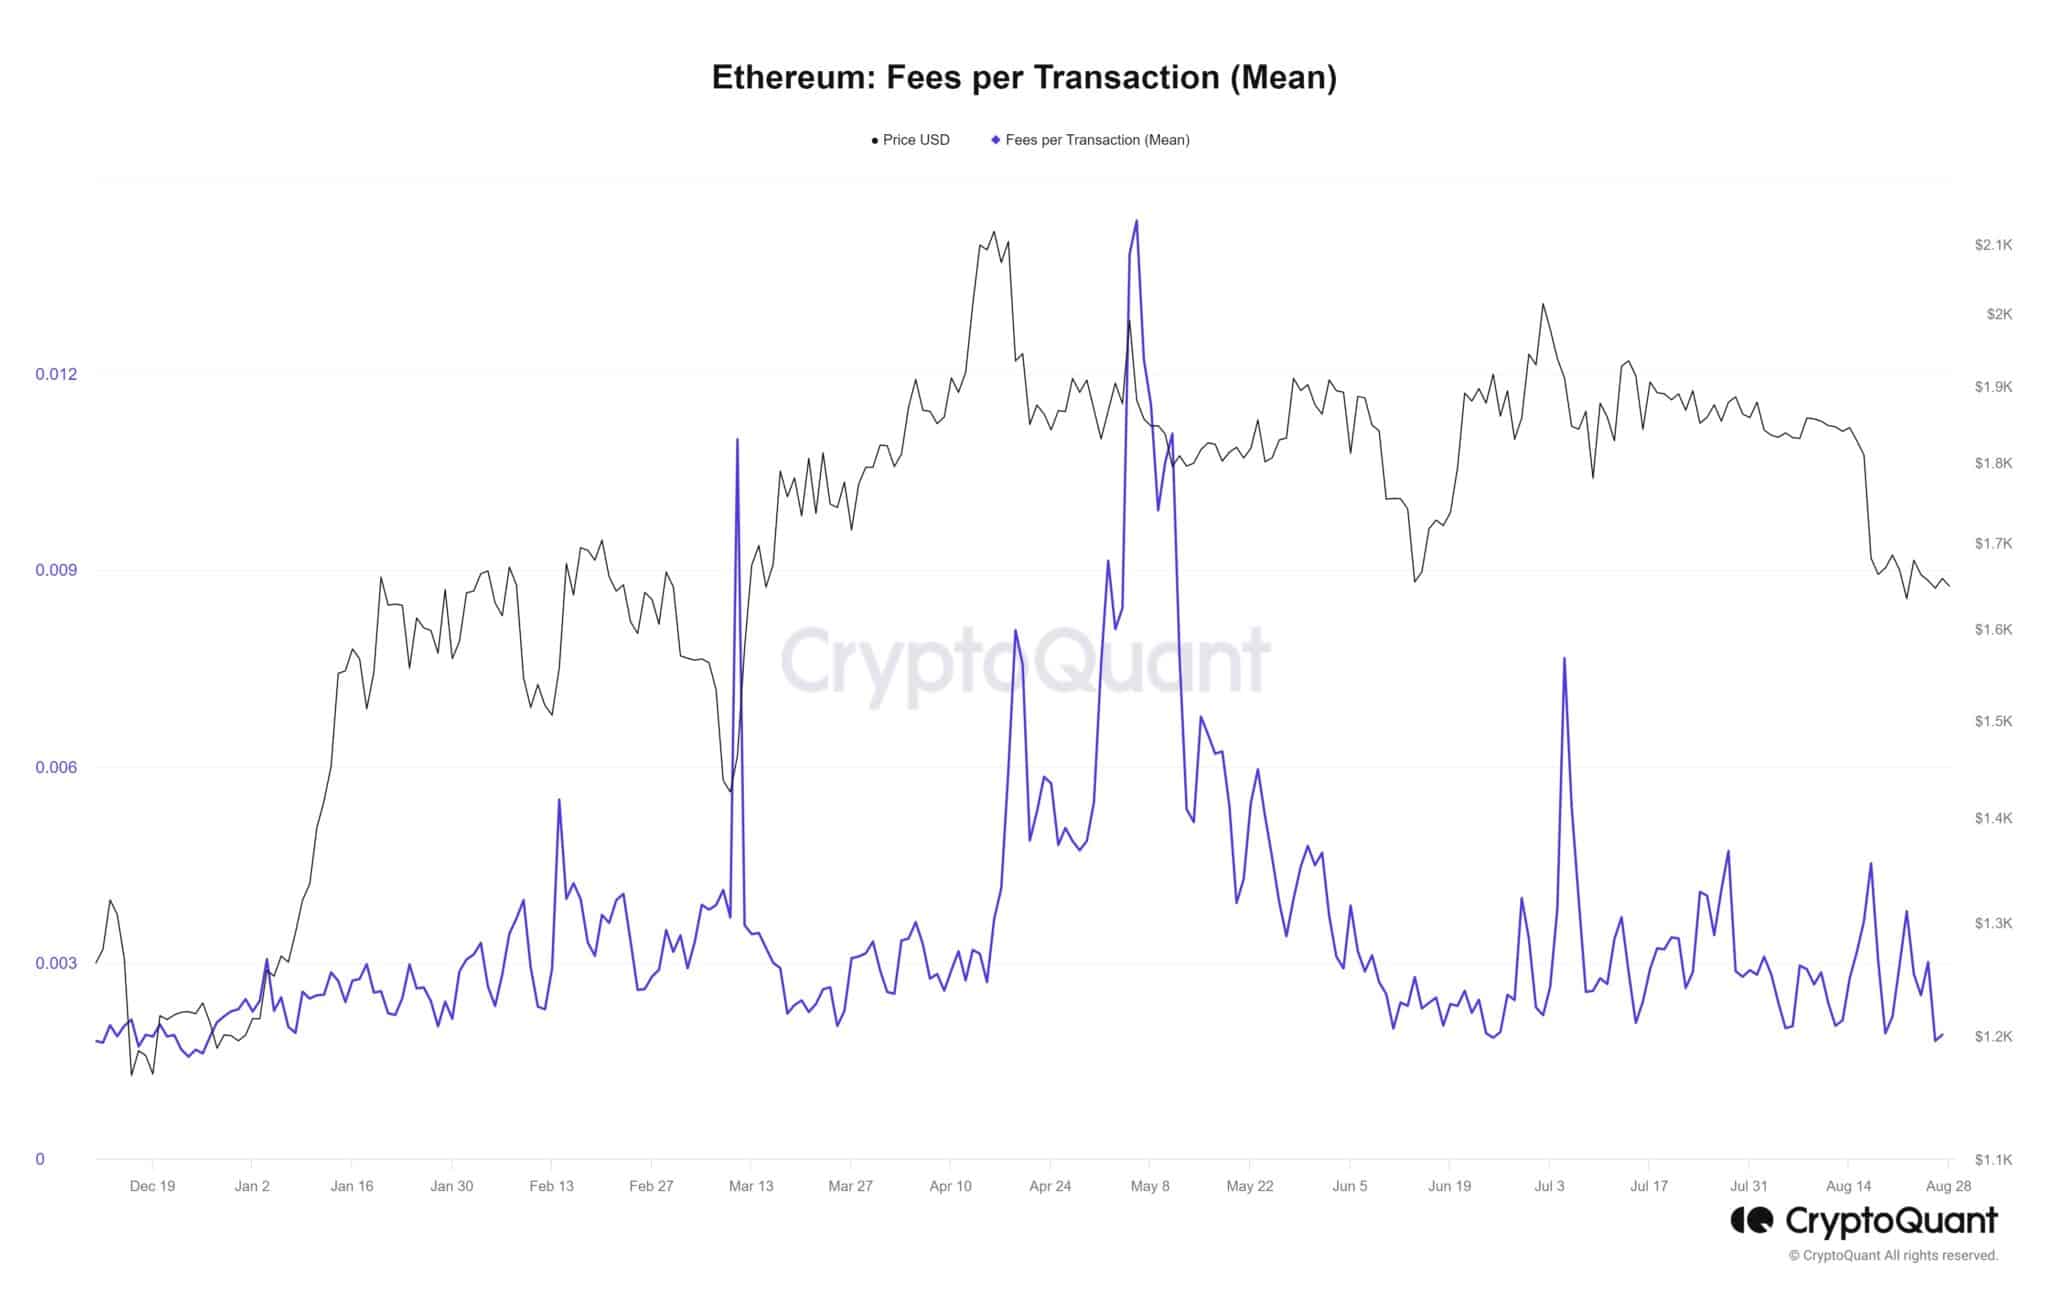 Fees per transaction for Ethereum (purple)